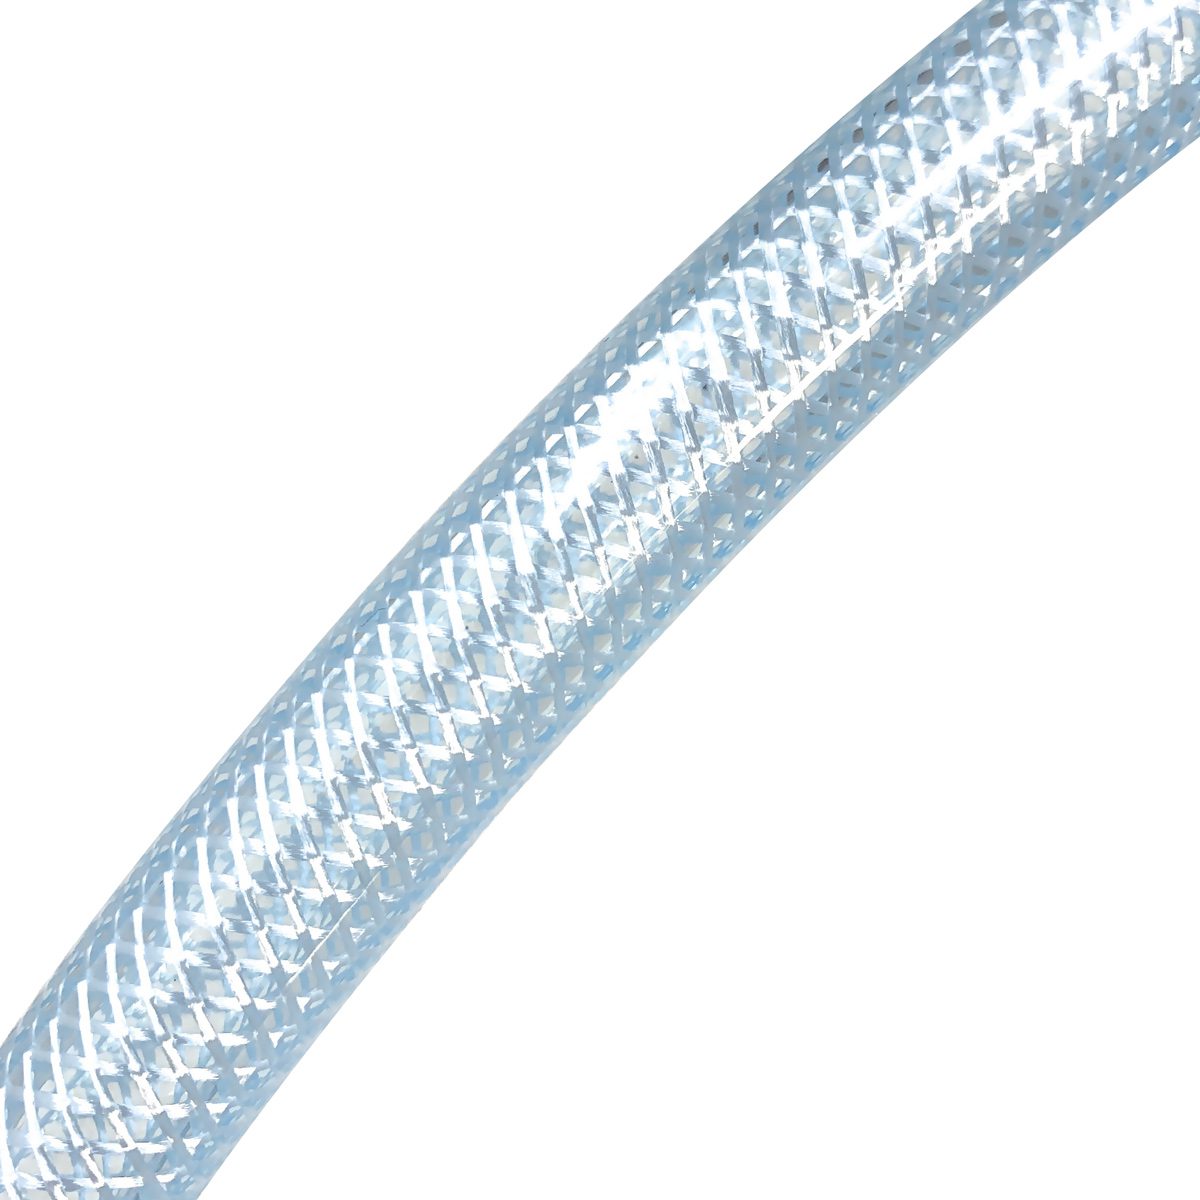 Gloxco Clear Braided PVC Tube, Food Grade Hose, 3/8 ID, 25 Ft Length